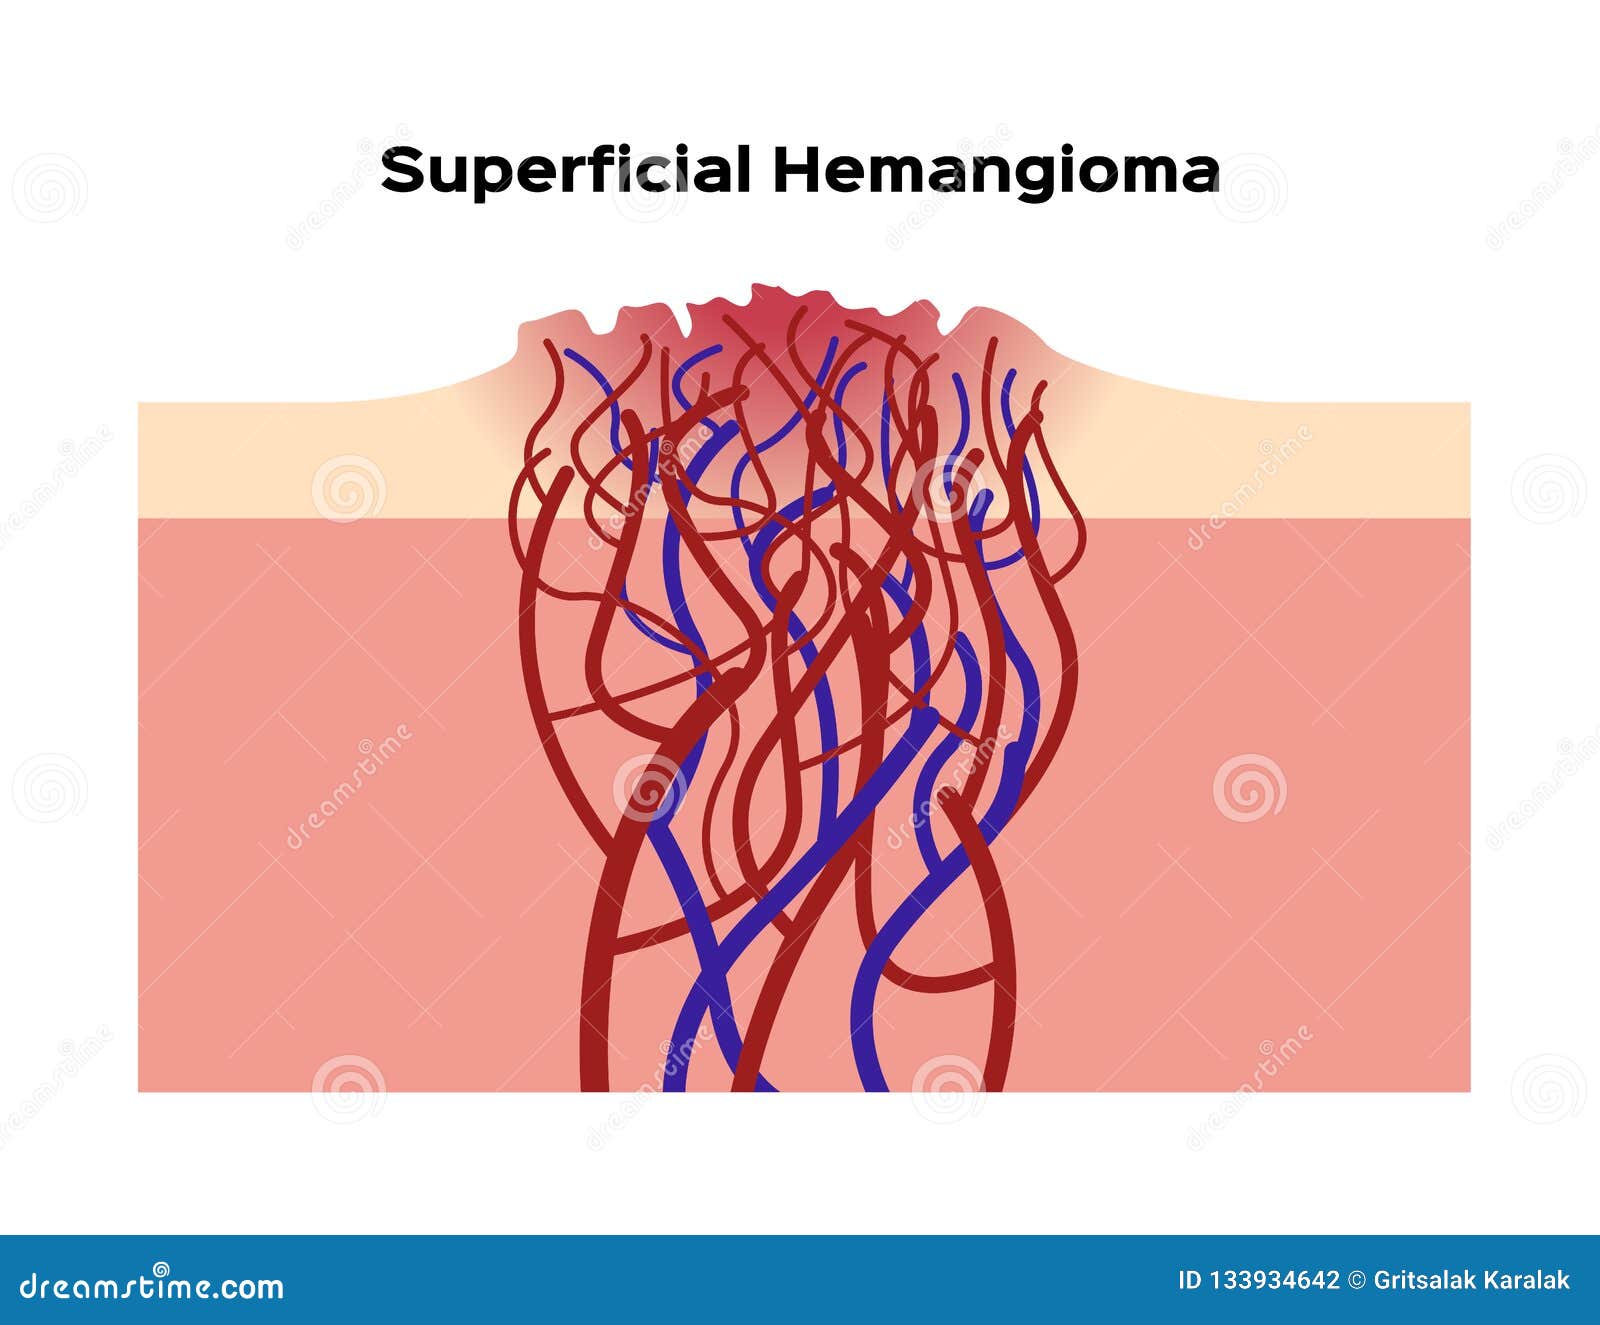 superficial hemangioma / organ and anatomy